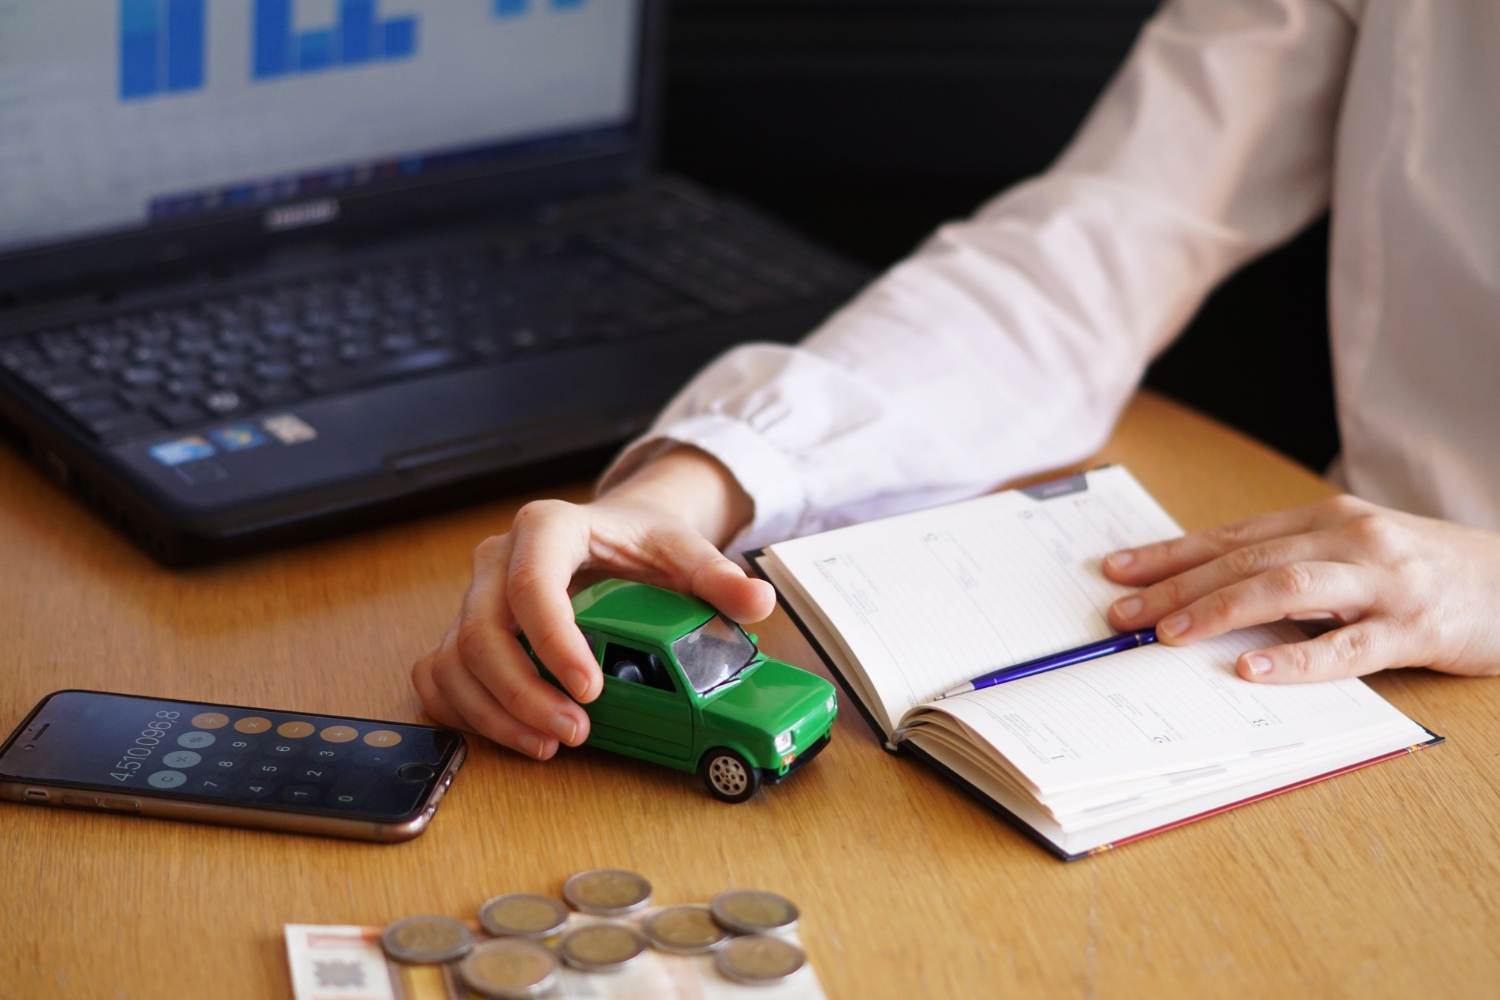 Finantarea, inchirierea sau leasingul: cum este mai bine sa cumparati o masina?